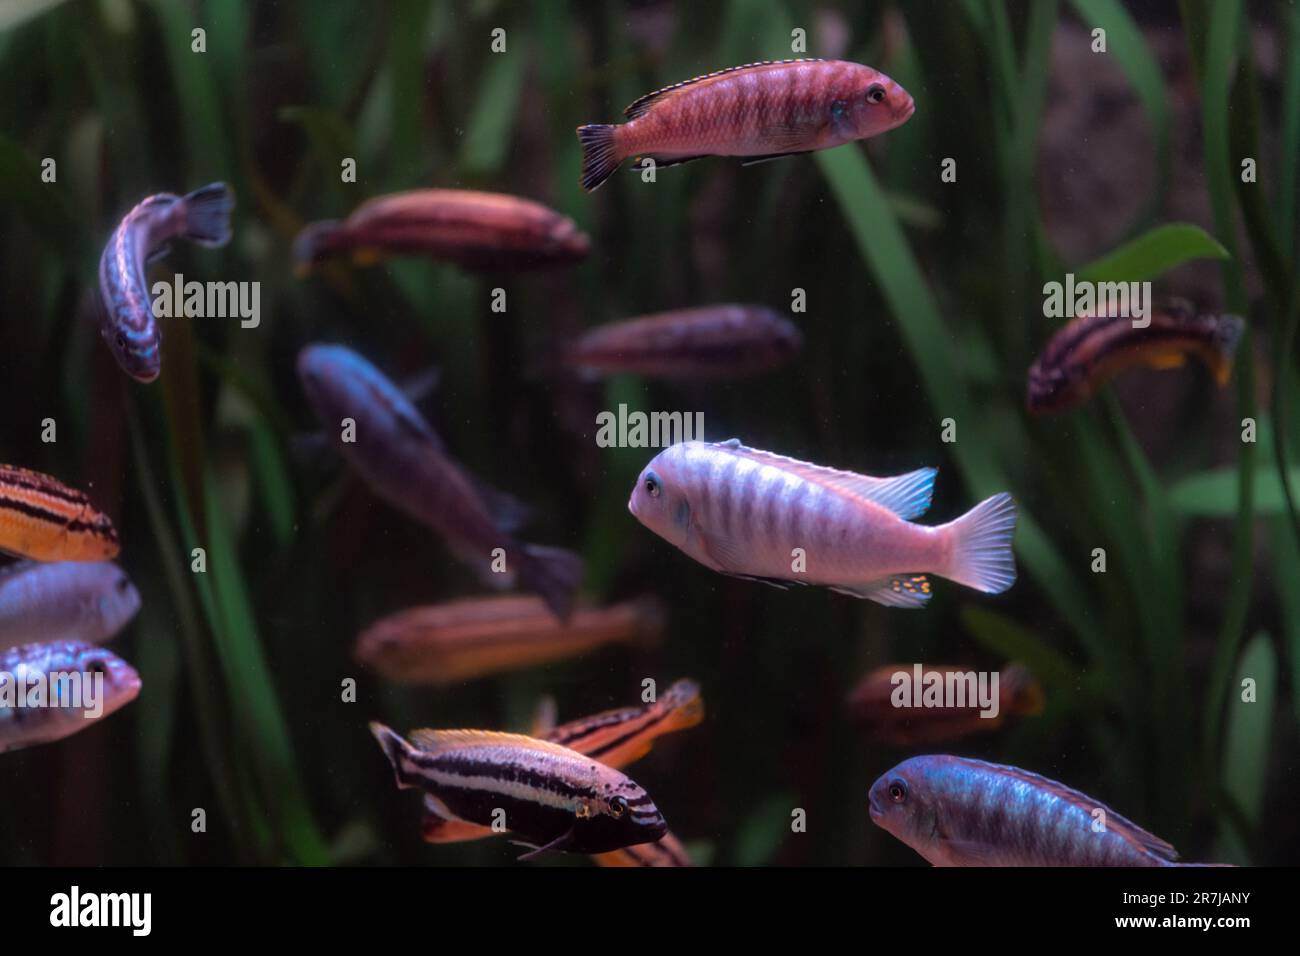 Portrait of freshwater cichlid fish (Maylandia zebra) in aquarium, copy space for text Stock Photo